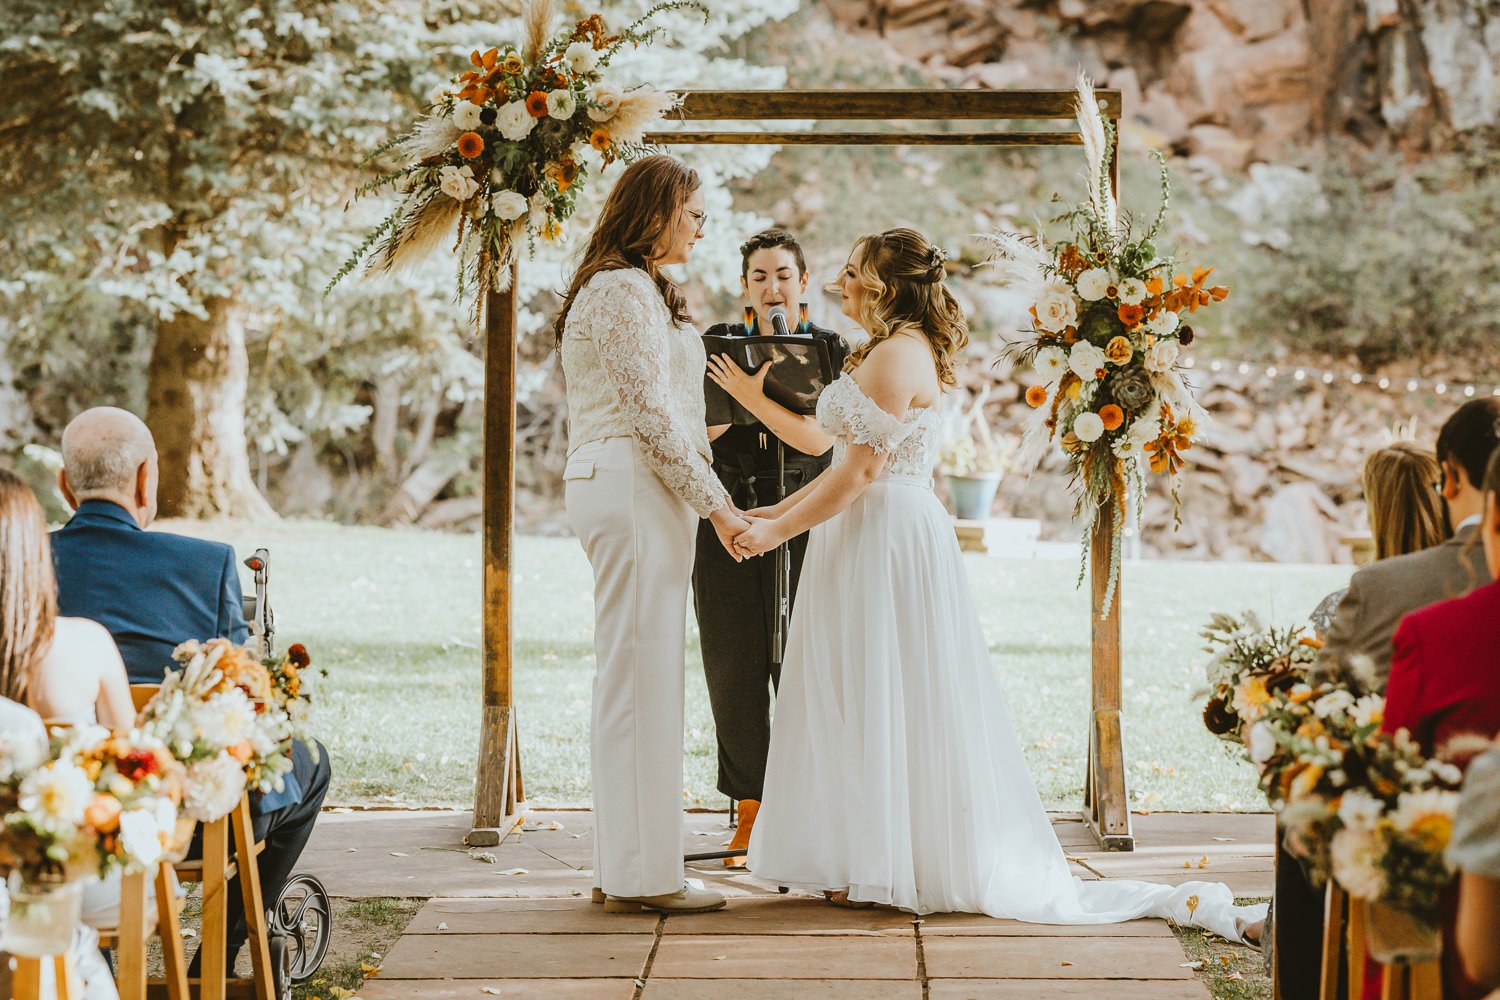 Plume&Furrow-Wedding-FLorist-Kennedy&Jena-IvyBencheckPortraits-River-Bend-LGBTQ-September-Colorado-Ceremony-Decor.jpg